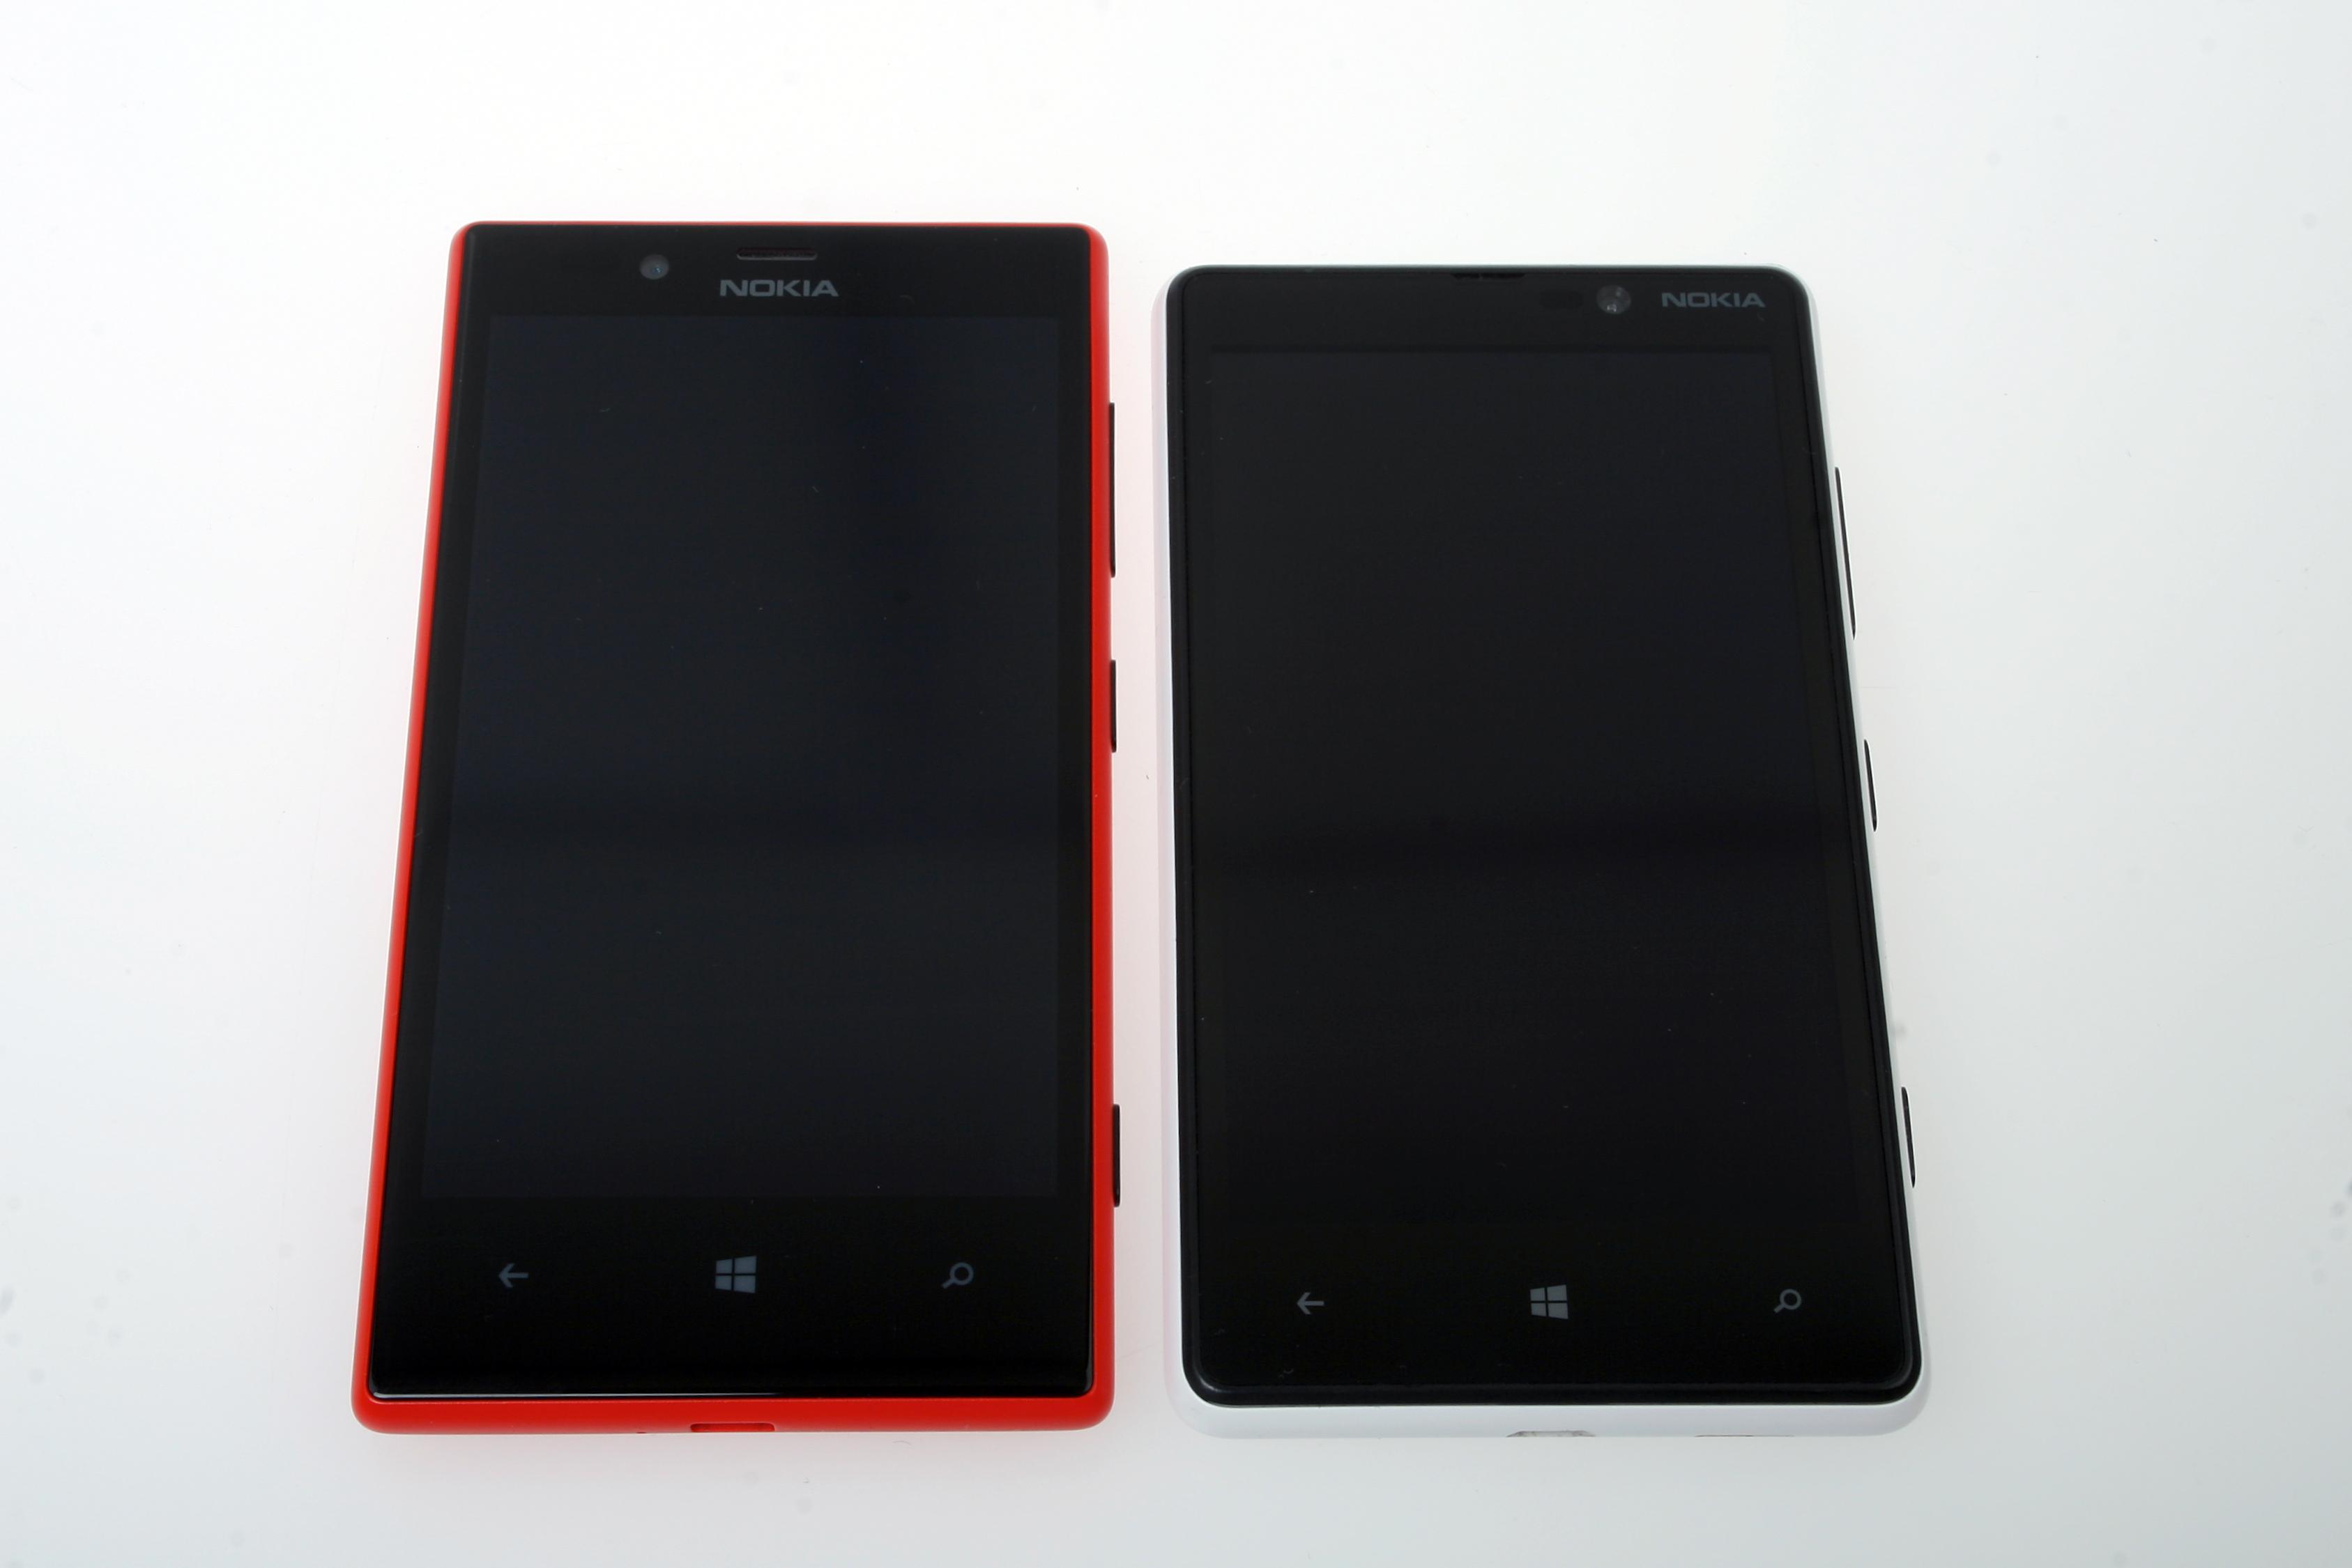 Nokia Lumia 720 (til venstre) og Lumia 820.Foto: Kurt Lekanger, Amobil.no